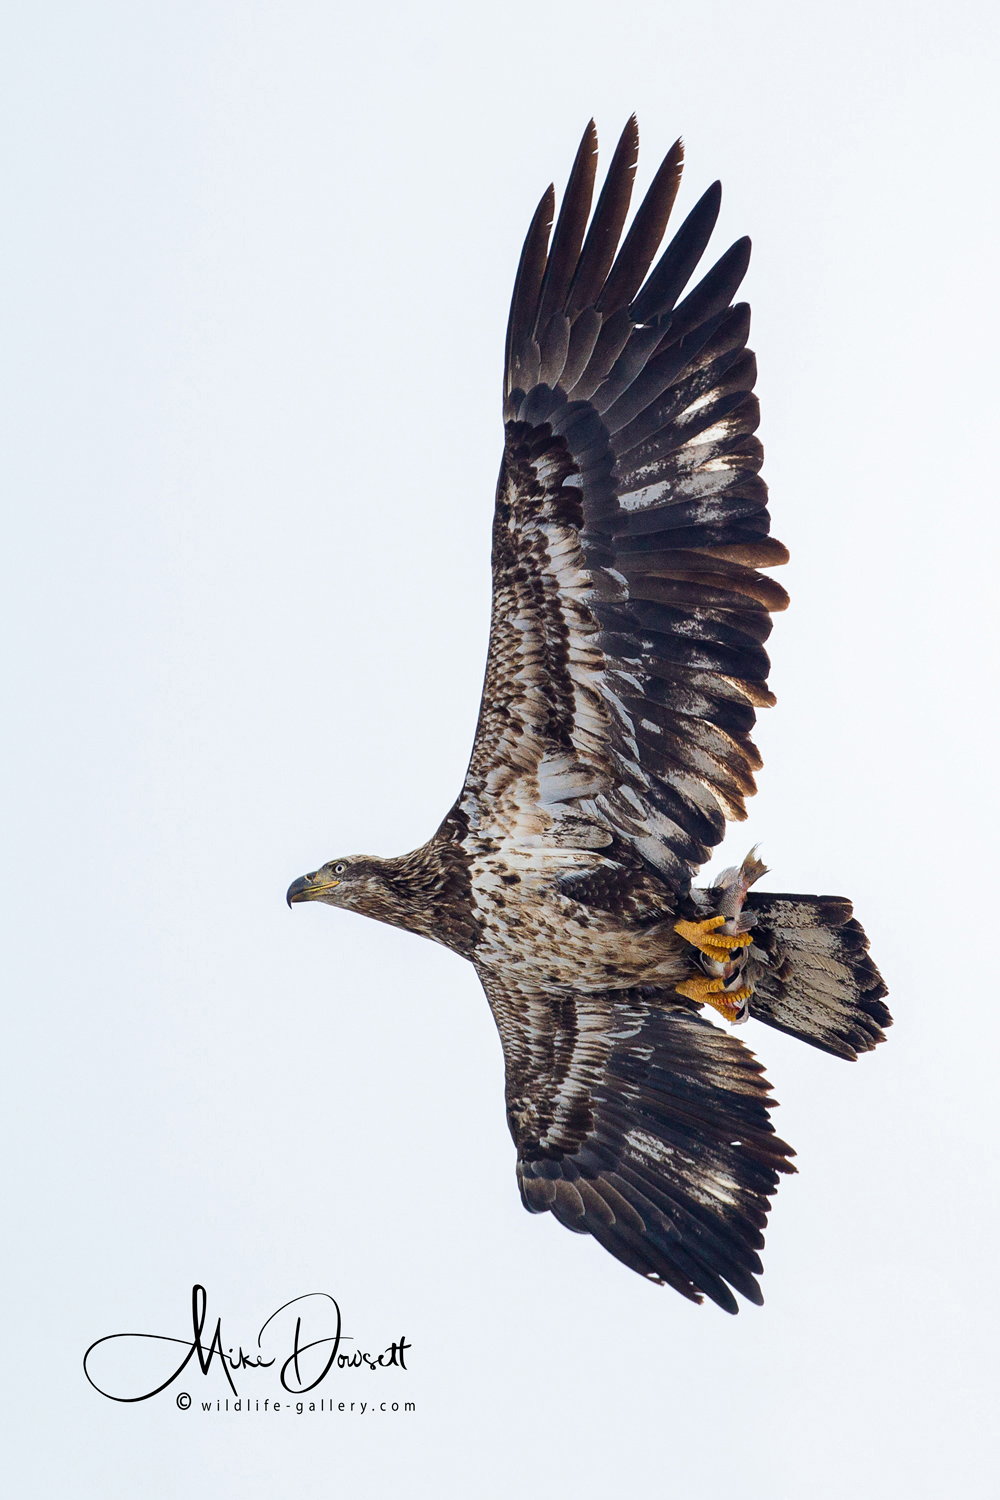 Wildlife Gallery Chasing Bald Eagle Flight Images